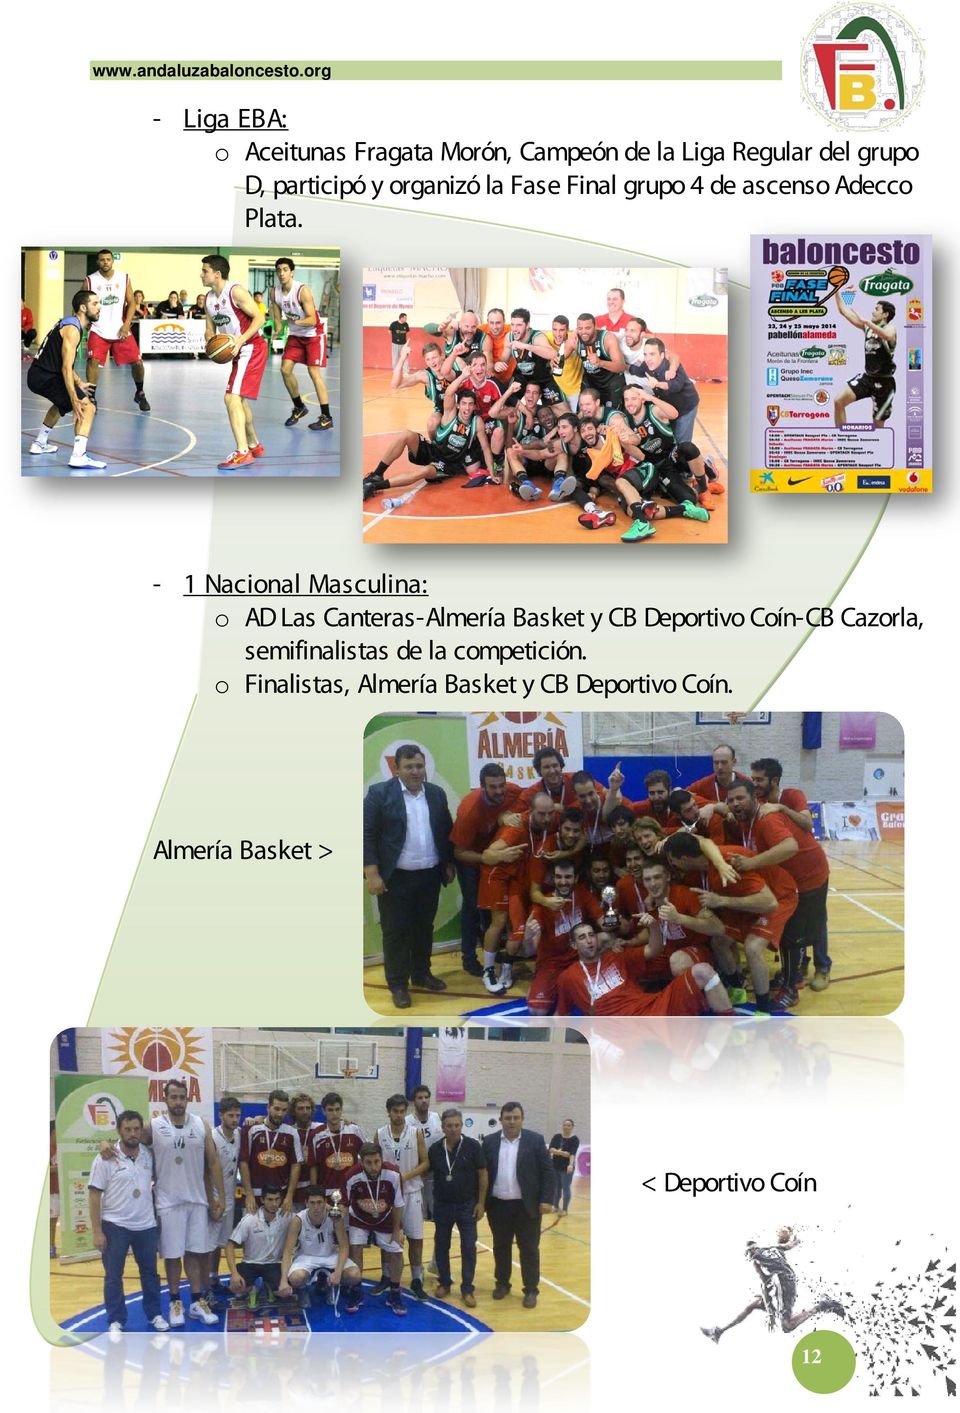 - 1 Nacional Masculina: o AD Las Canteras-Almería Basket y CB Deportivo Coín-CB Cazorla,